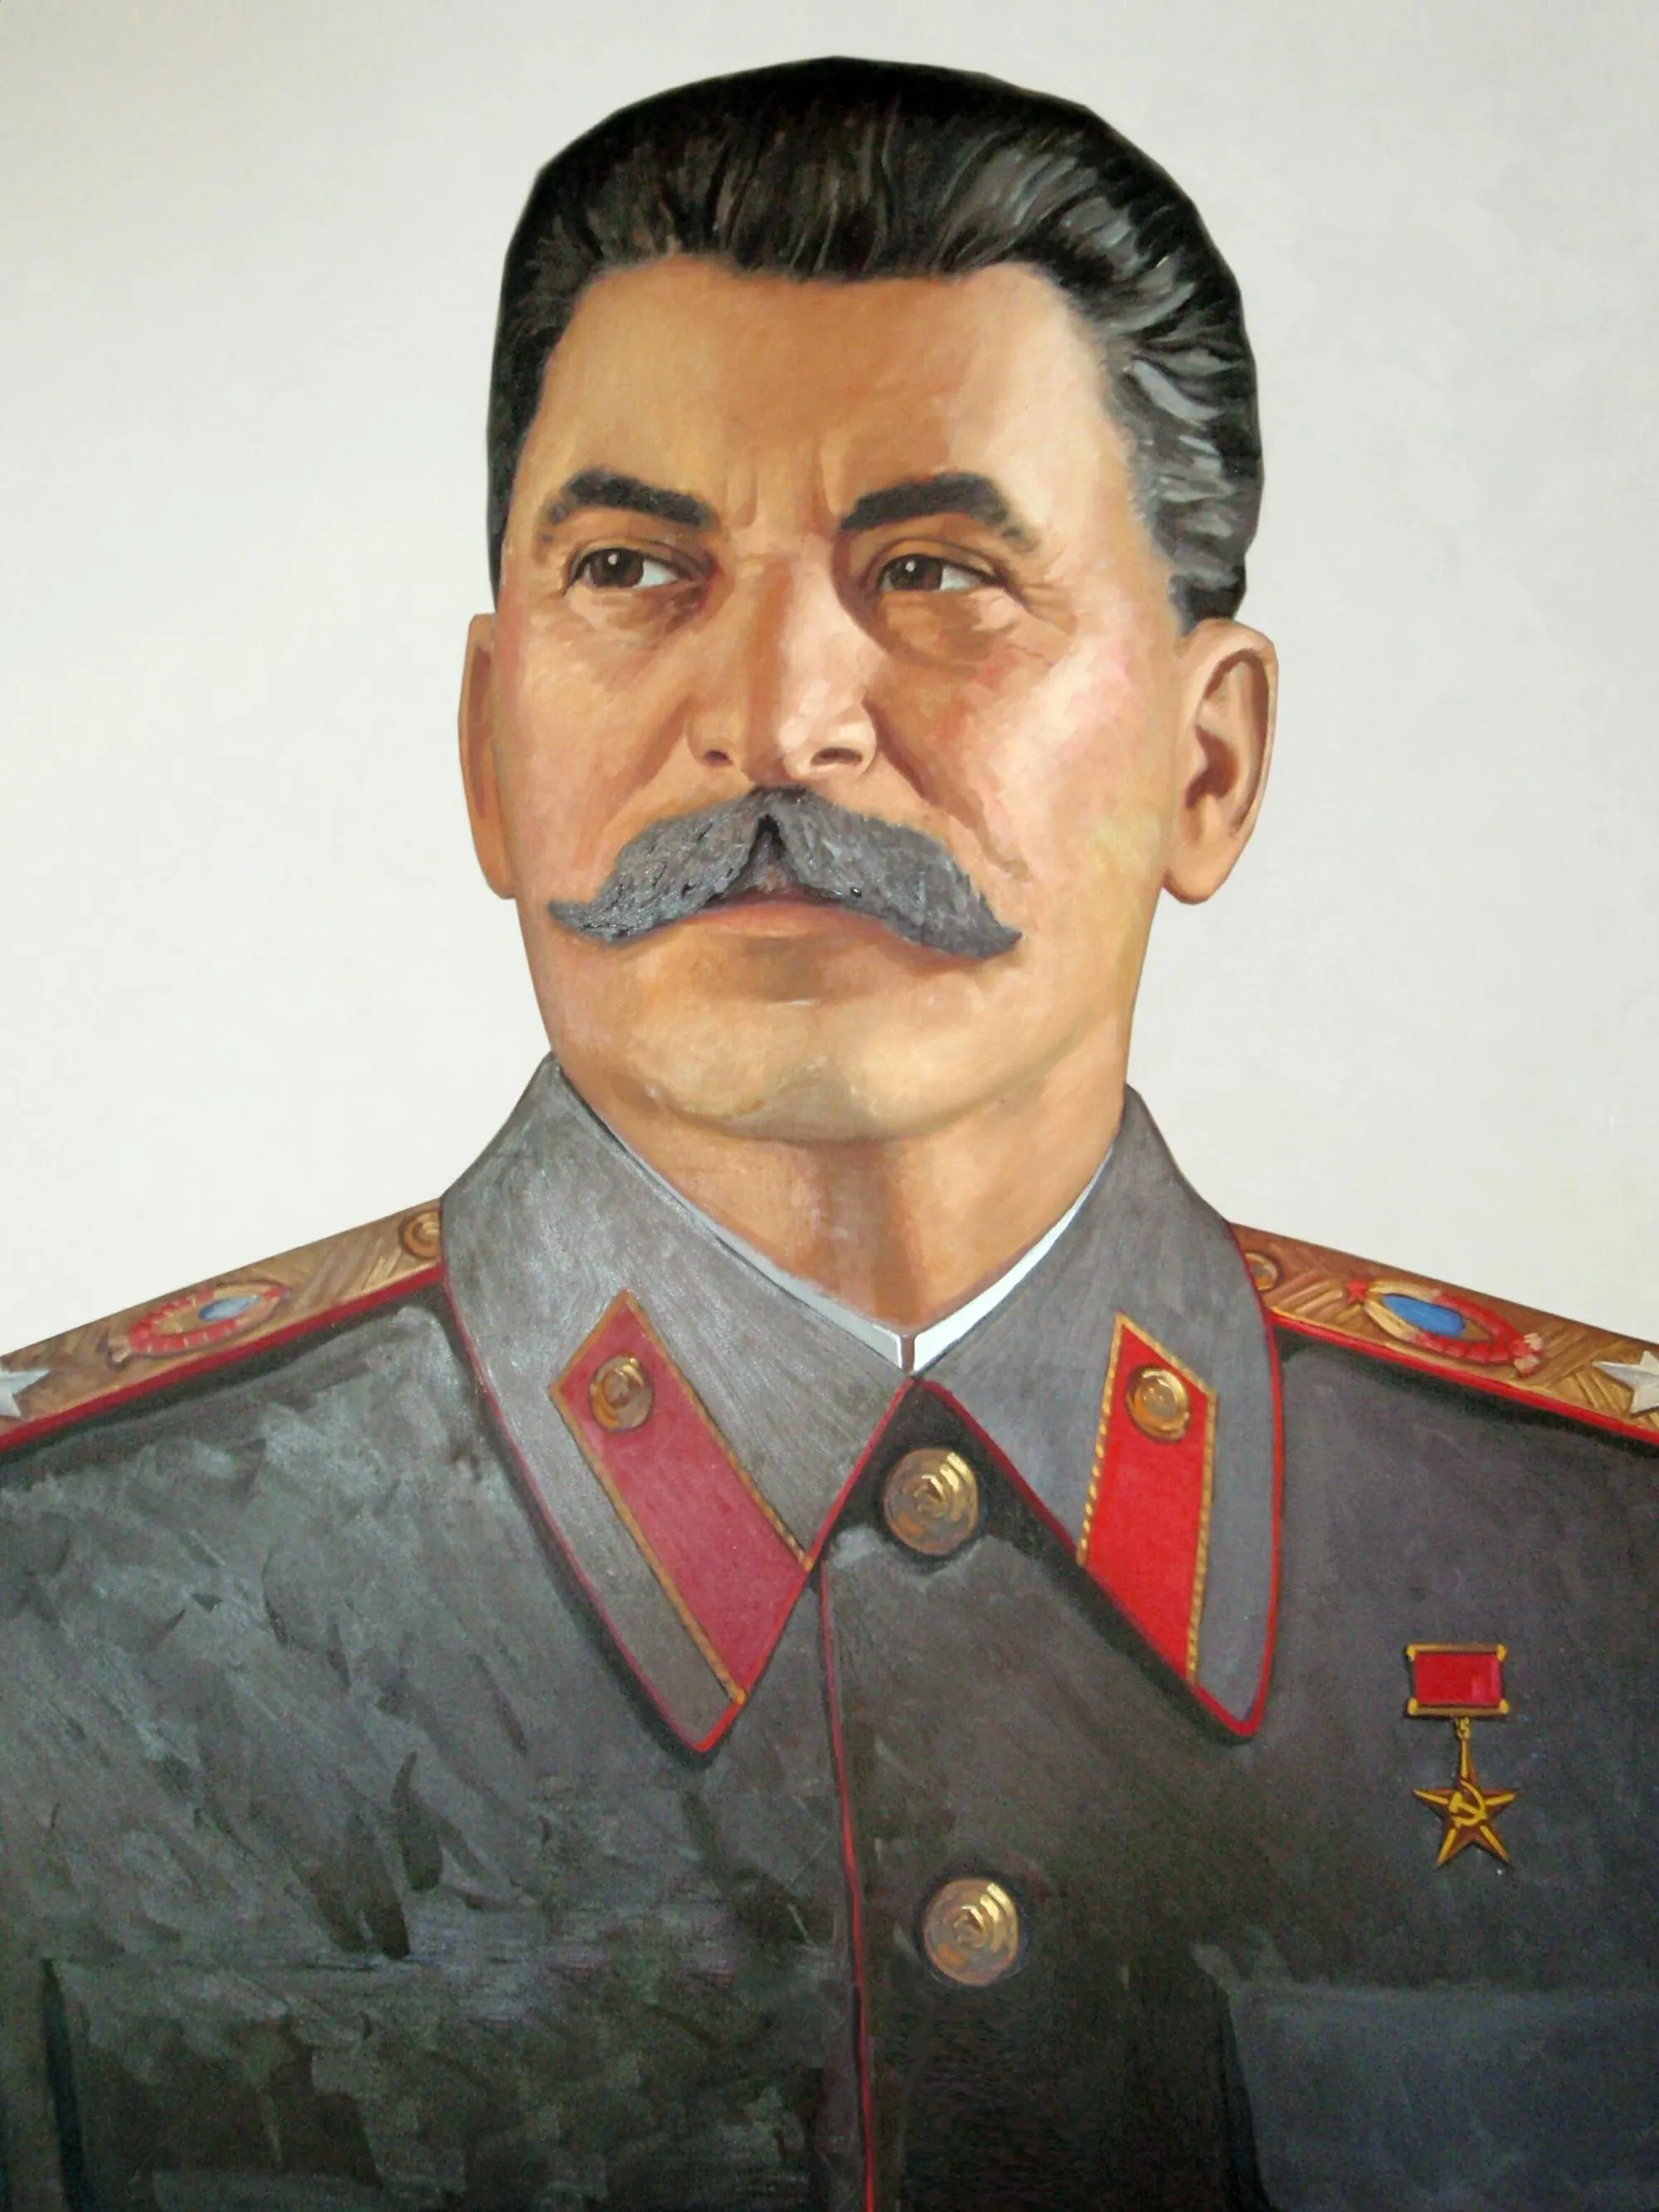 Joseph Staline (1879-1953)